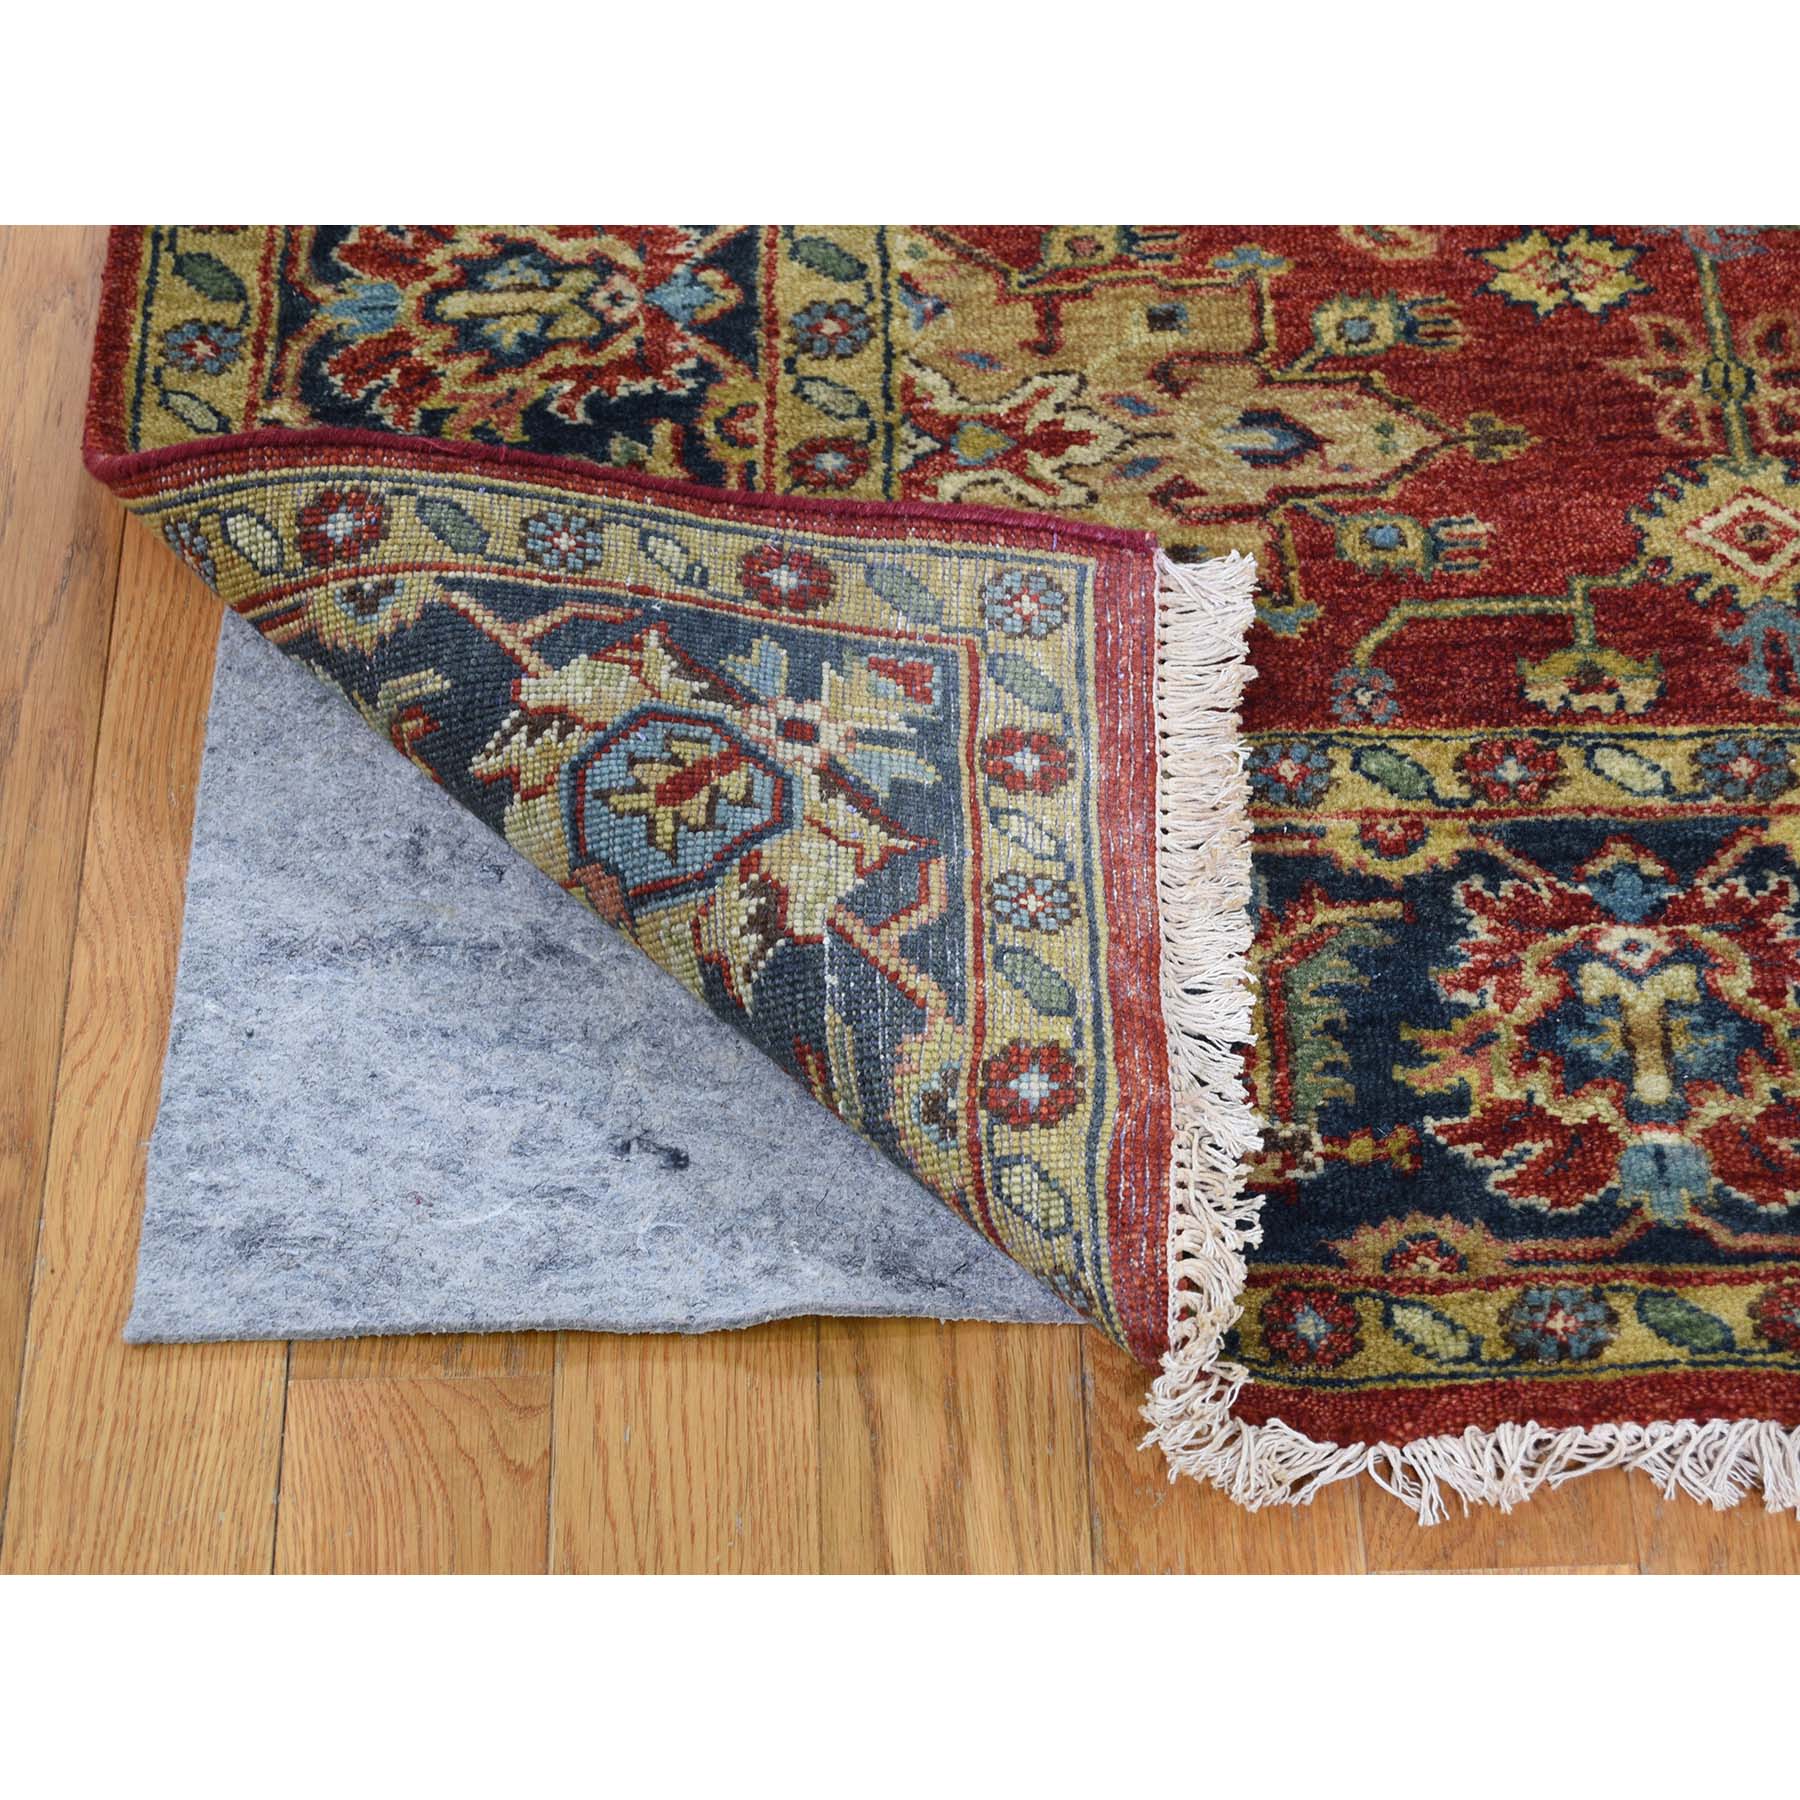 6'x8'9" Red Karajeh Design Pure Wool Hand Woven Oriental Rug 